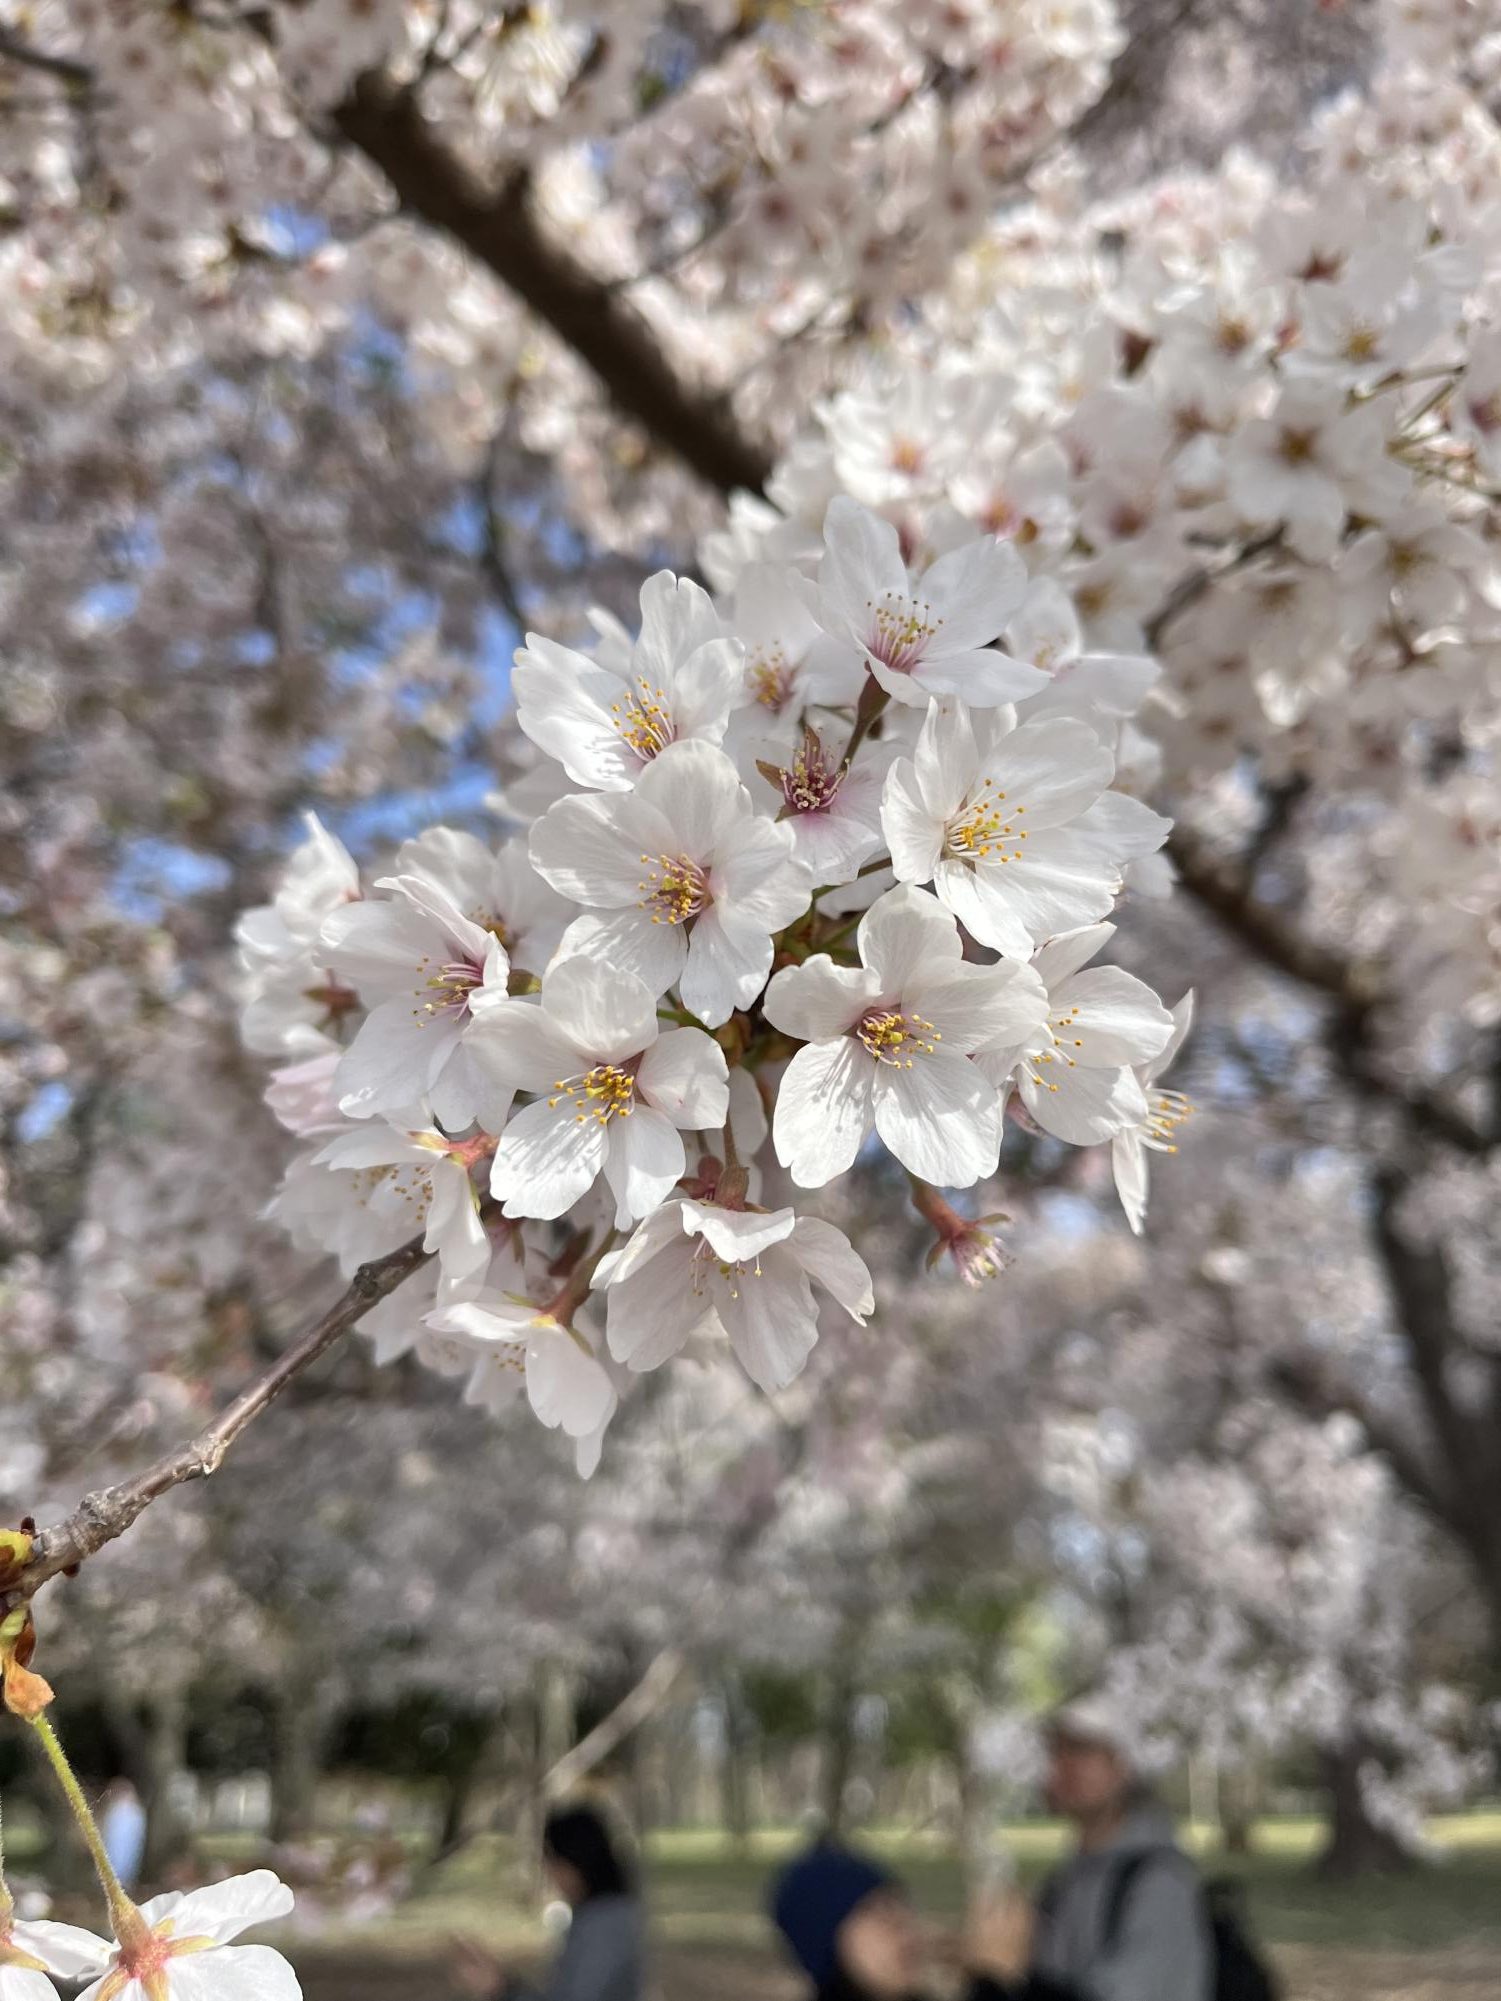 Washington+D.C.+during+Cherry+Blossom+Season%21